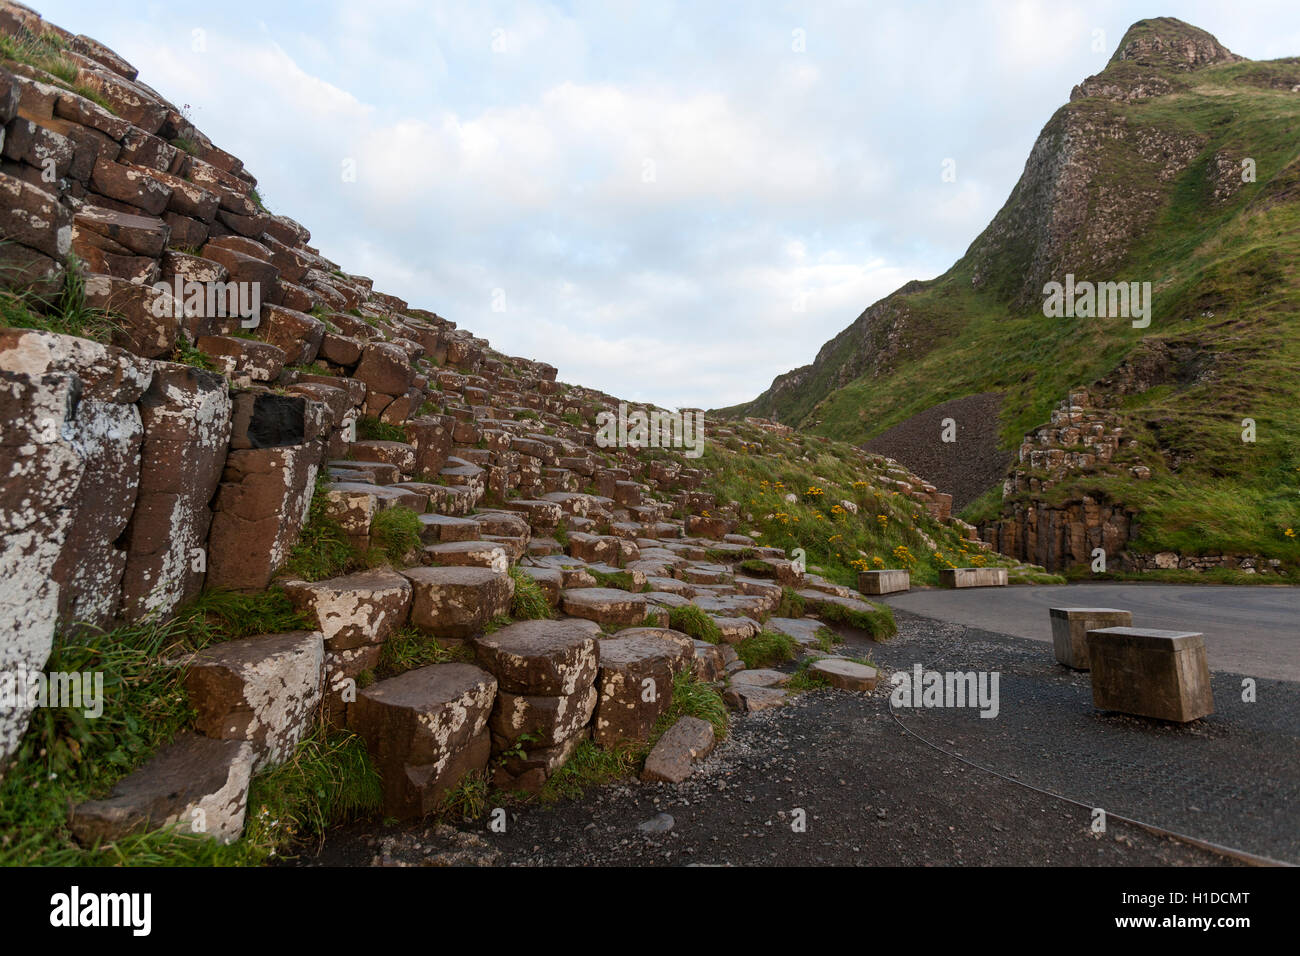 Giant's Causeway, Bushmills, County Antrim, Northern Ireland, UK Stock Photo